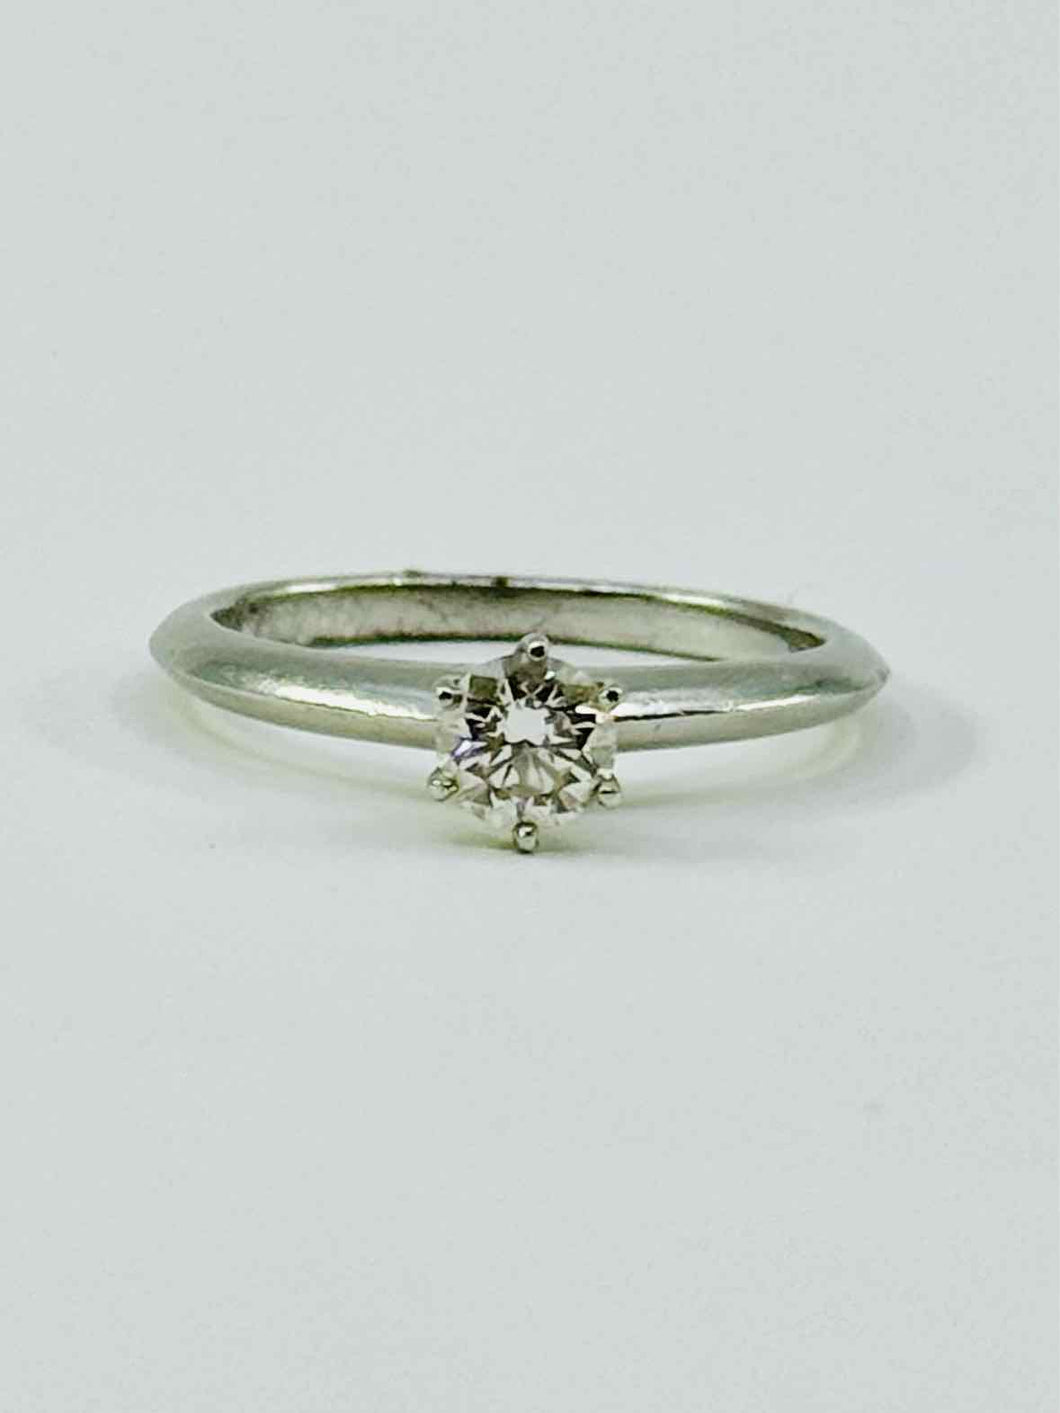 TIFFANY & CO Platinum Diamond Engagement Ring